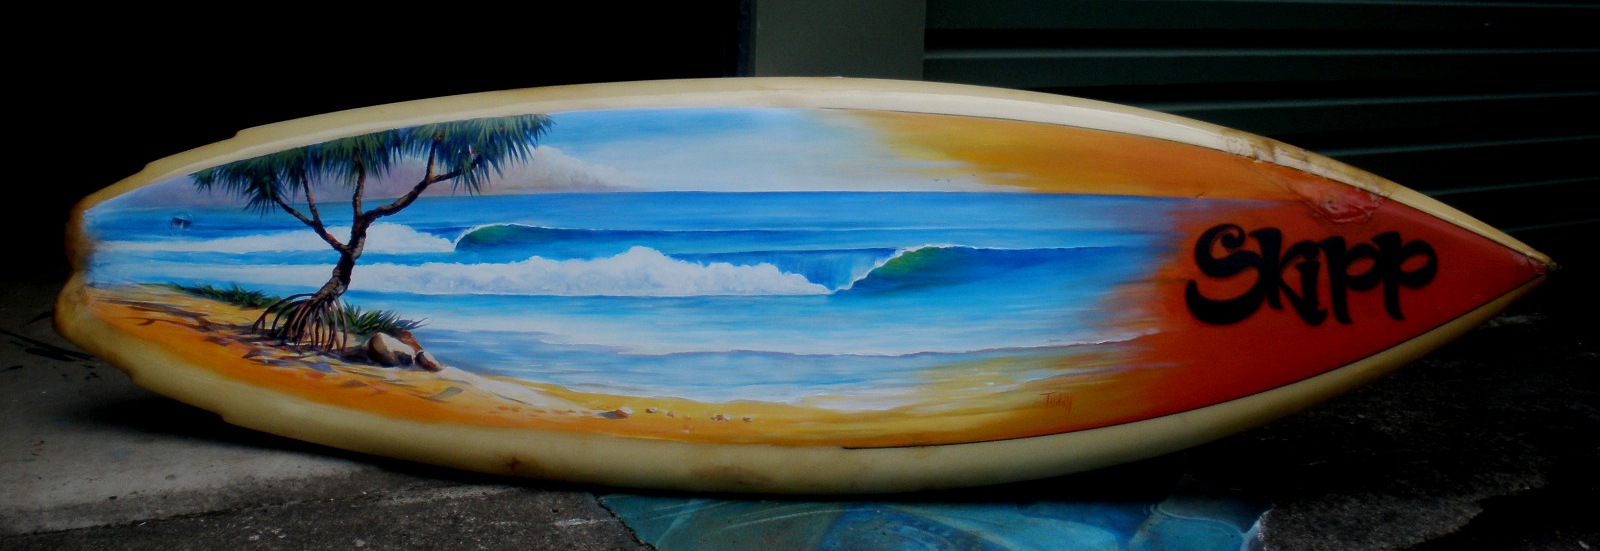 Surfboard No 1 sept2010